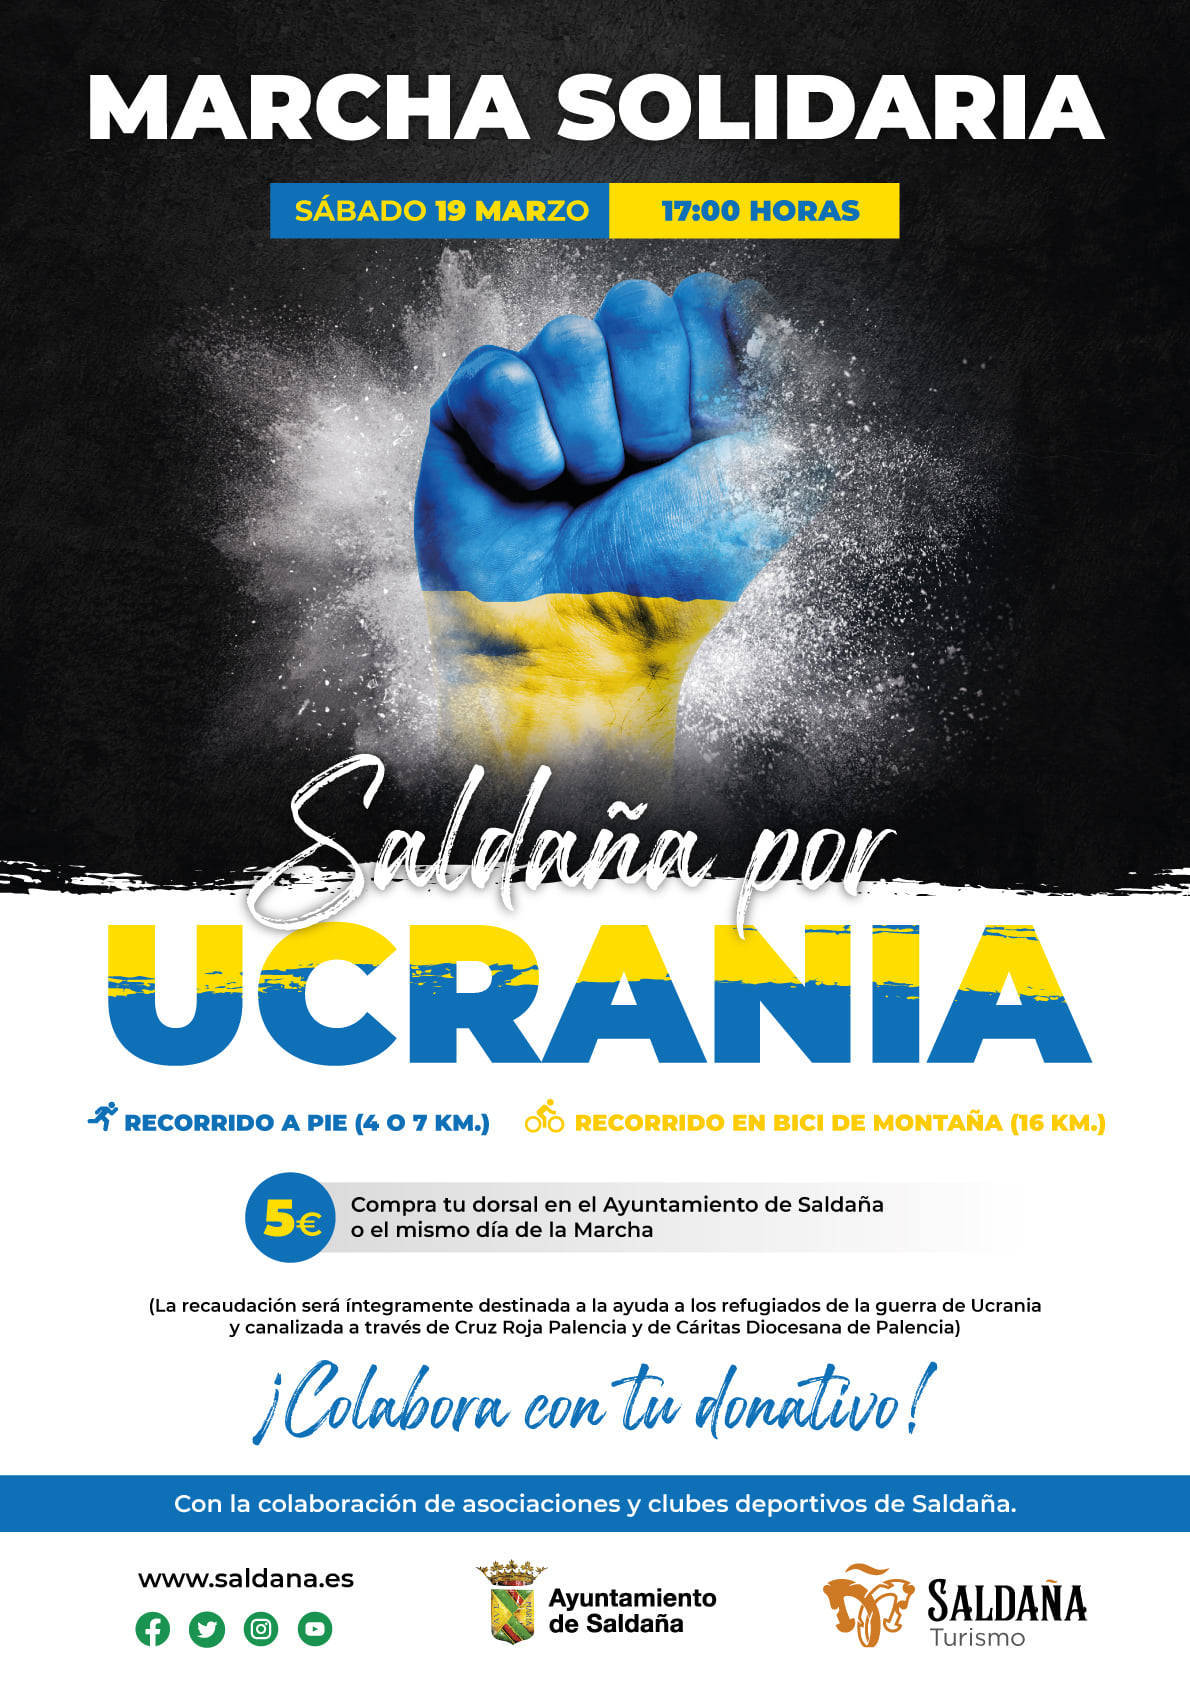 Marcha solidaria por Ucrania (2022) - Saldaña (Palencia)